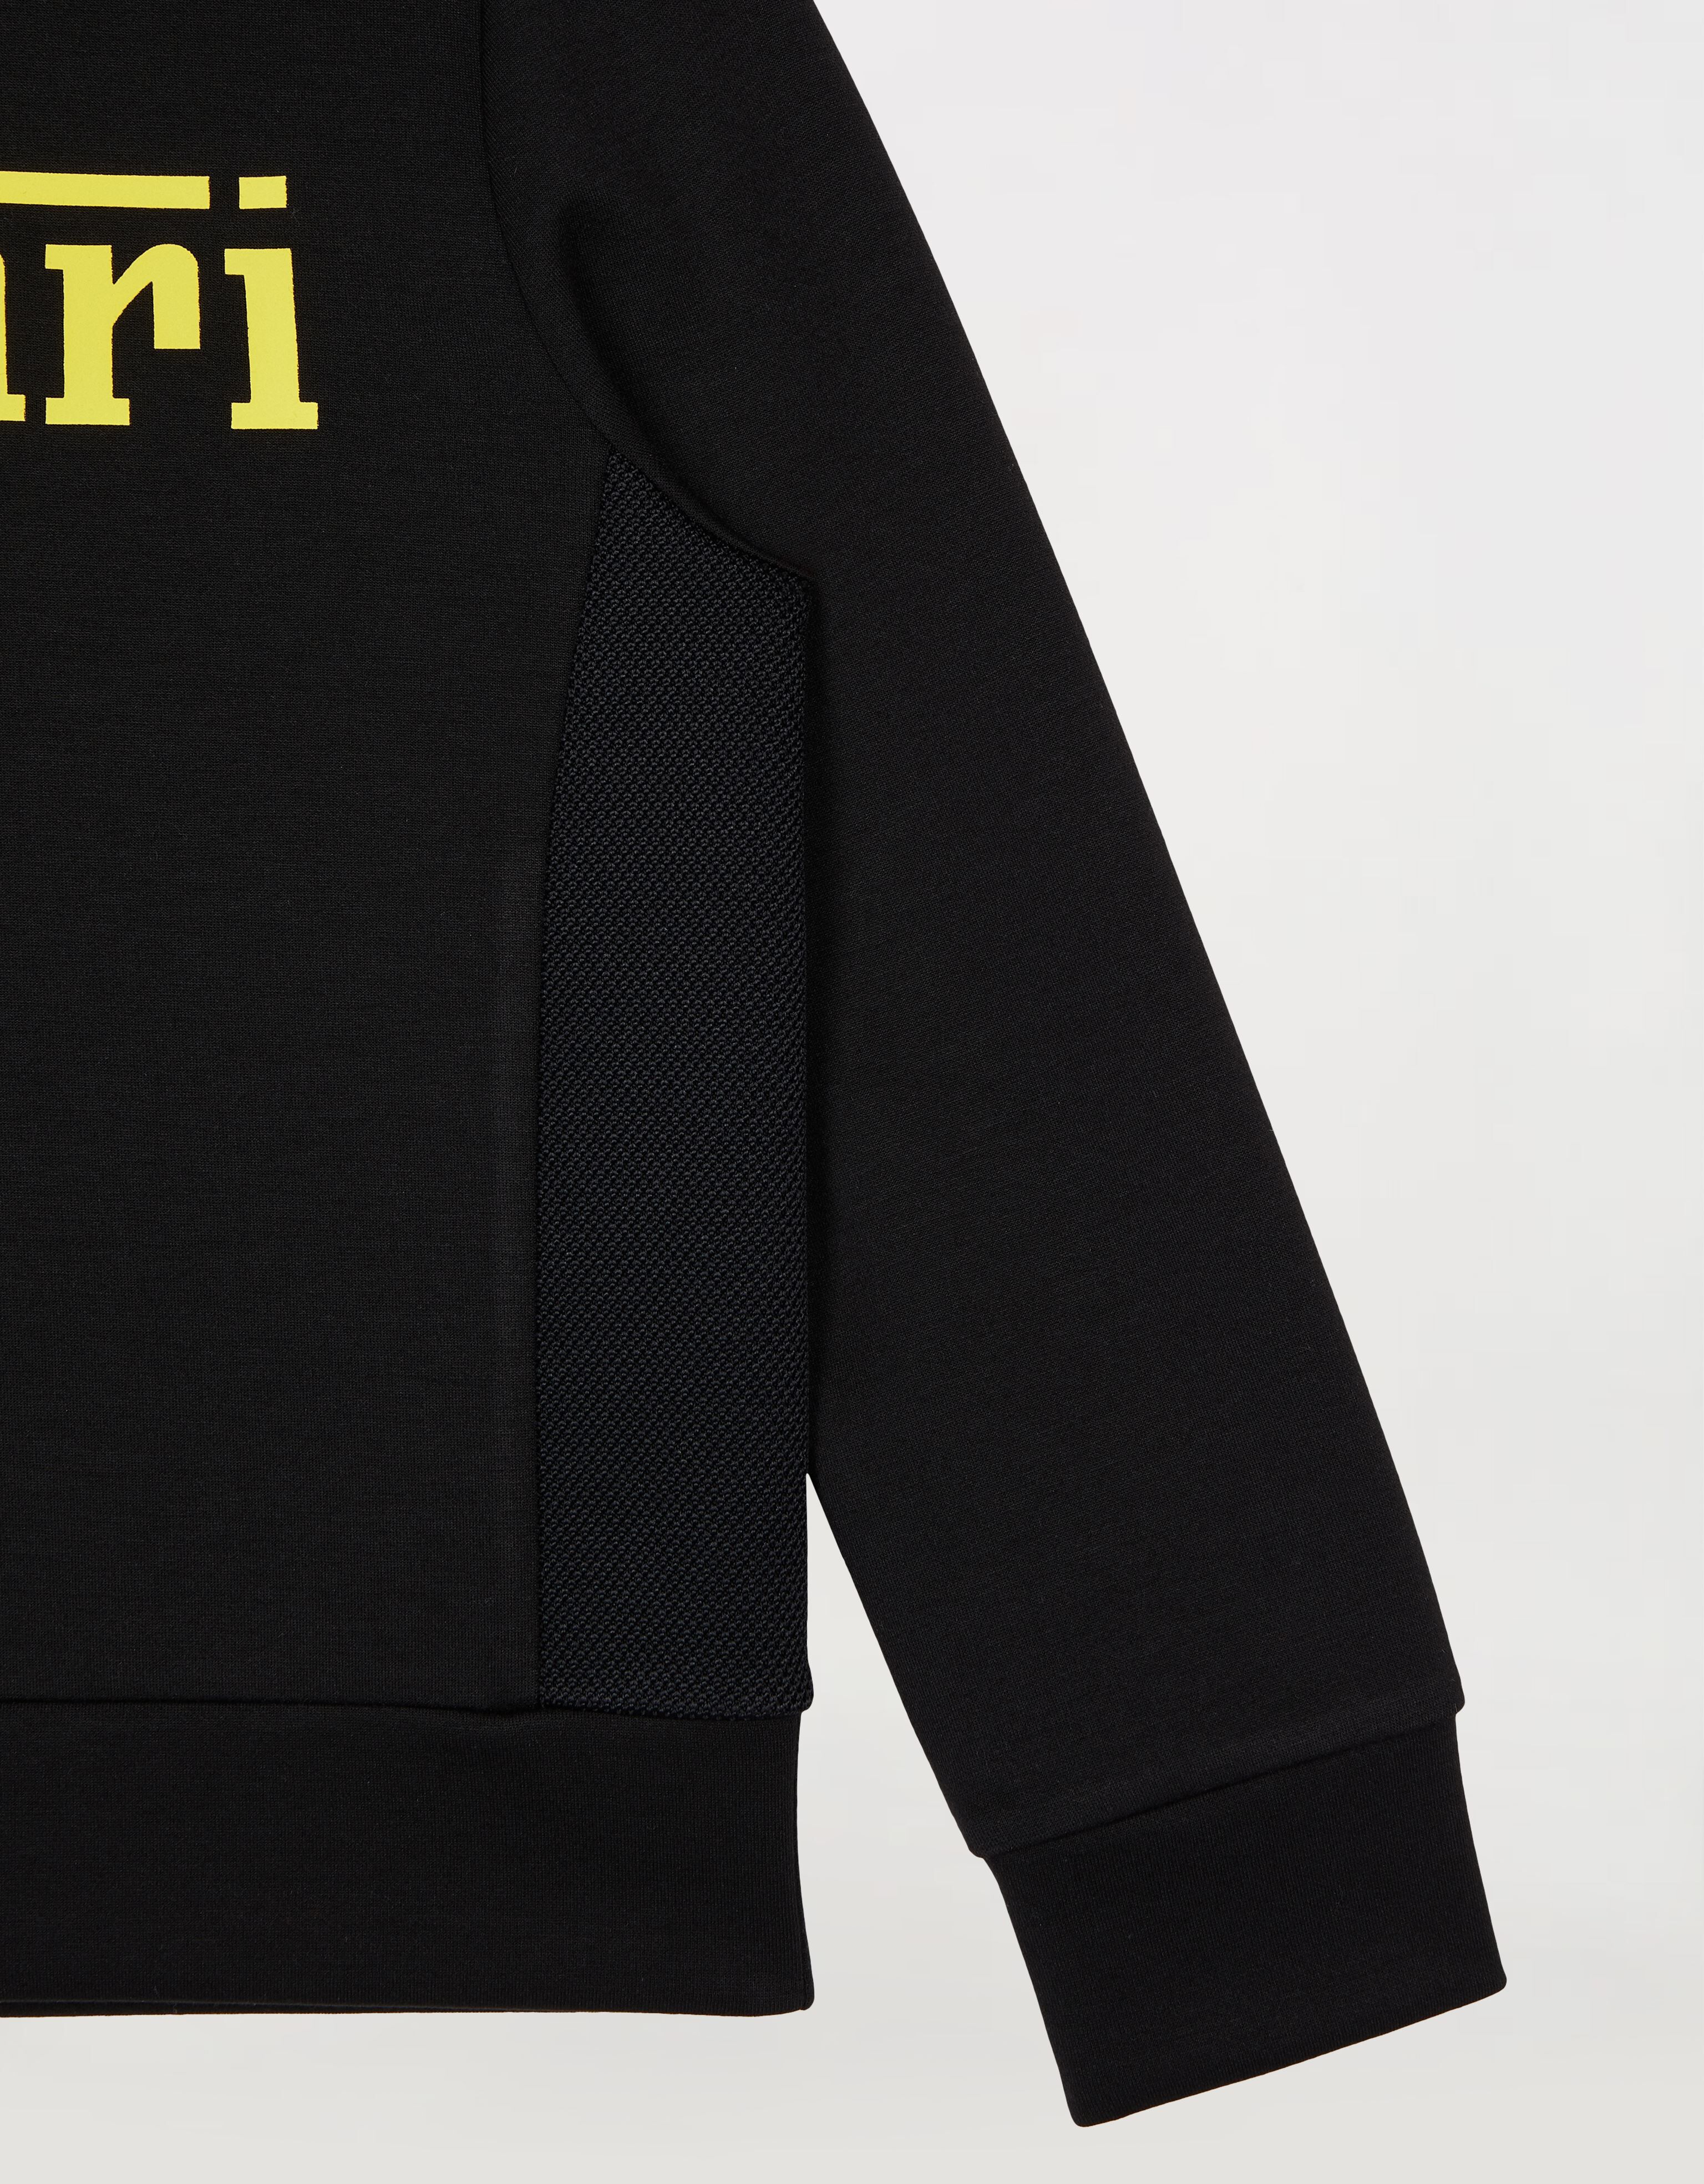 Ferrari Children’s sweatshirt in recycled scuba fabric with large Ferrari logo Black 46994fK